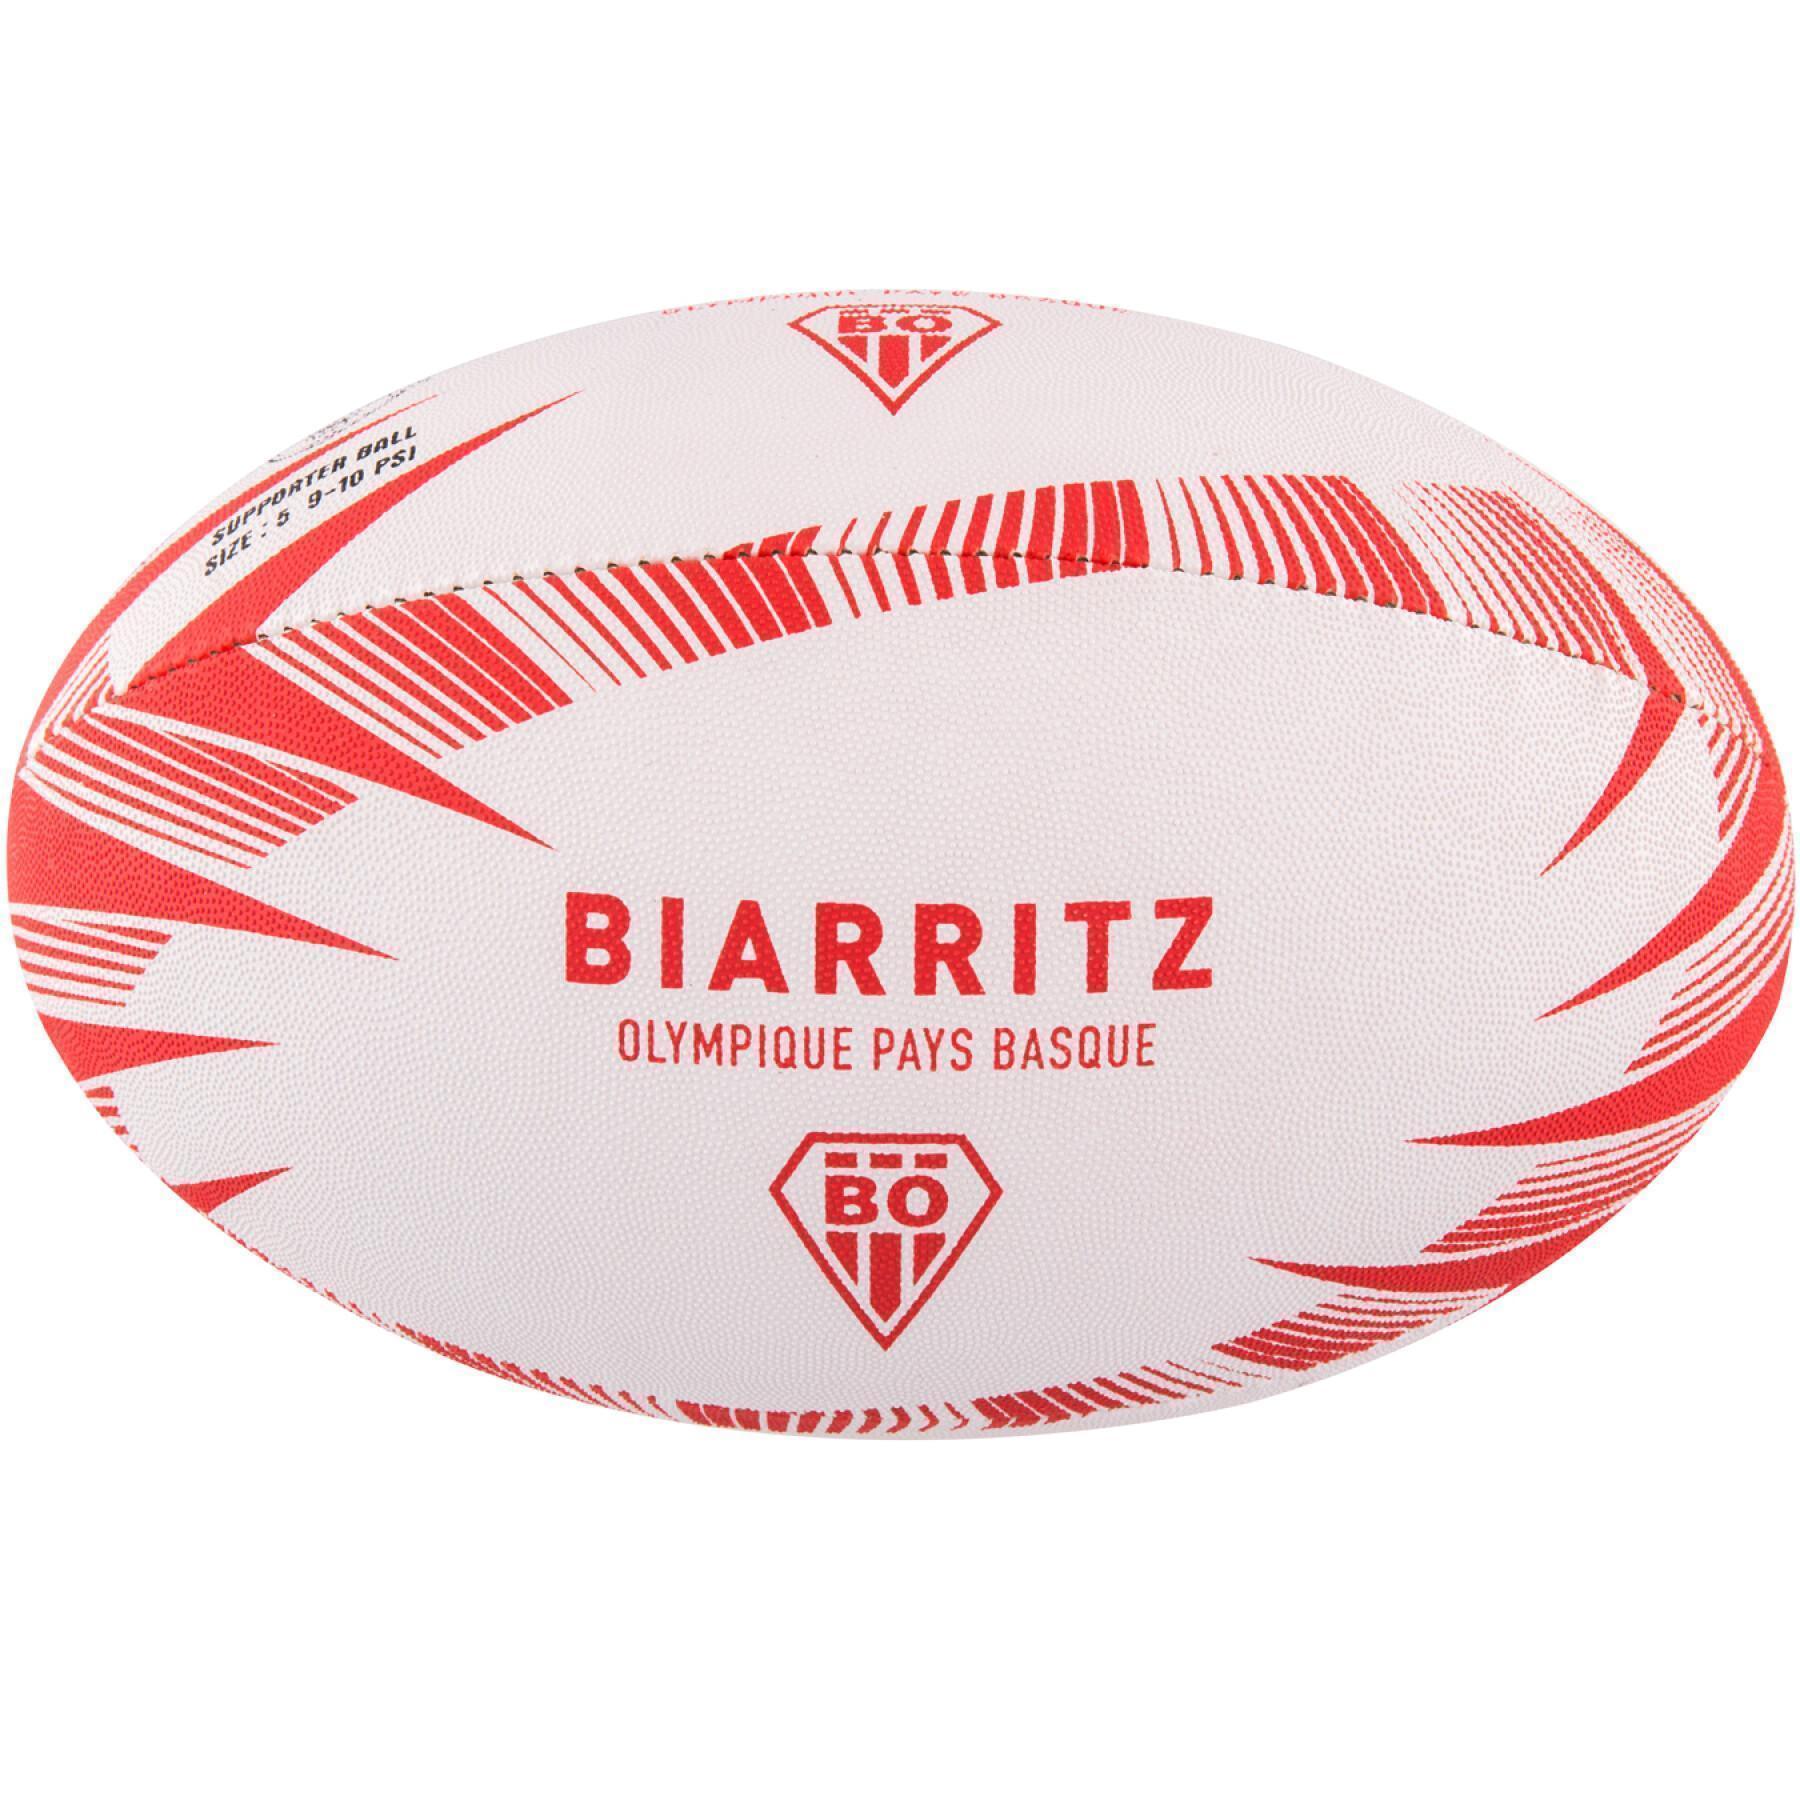 Stöd för rugbyboll Gilbert Biarritz (taille 5)